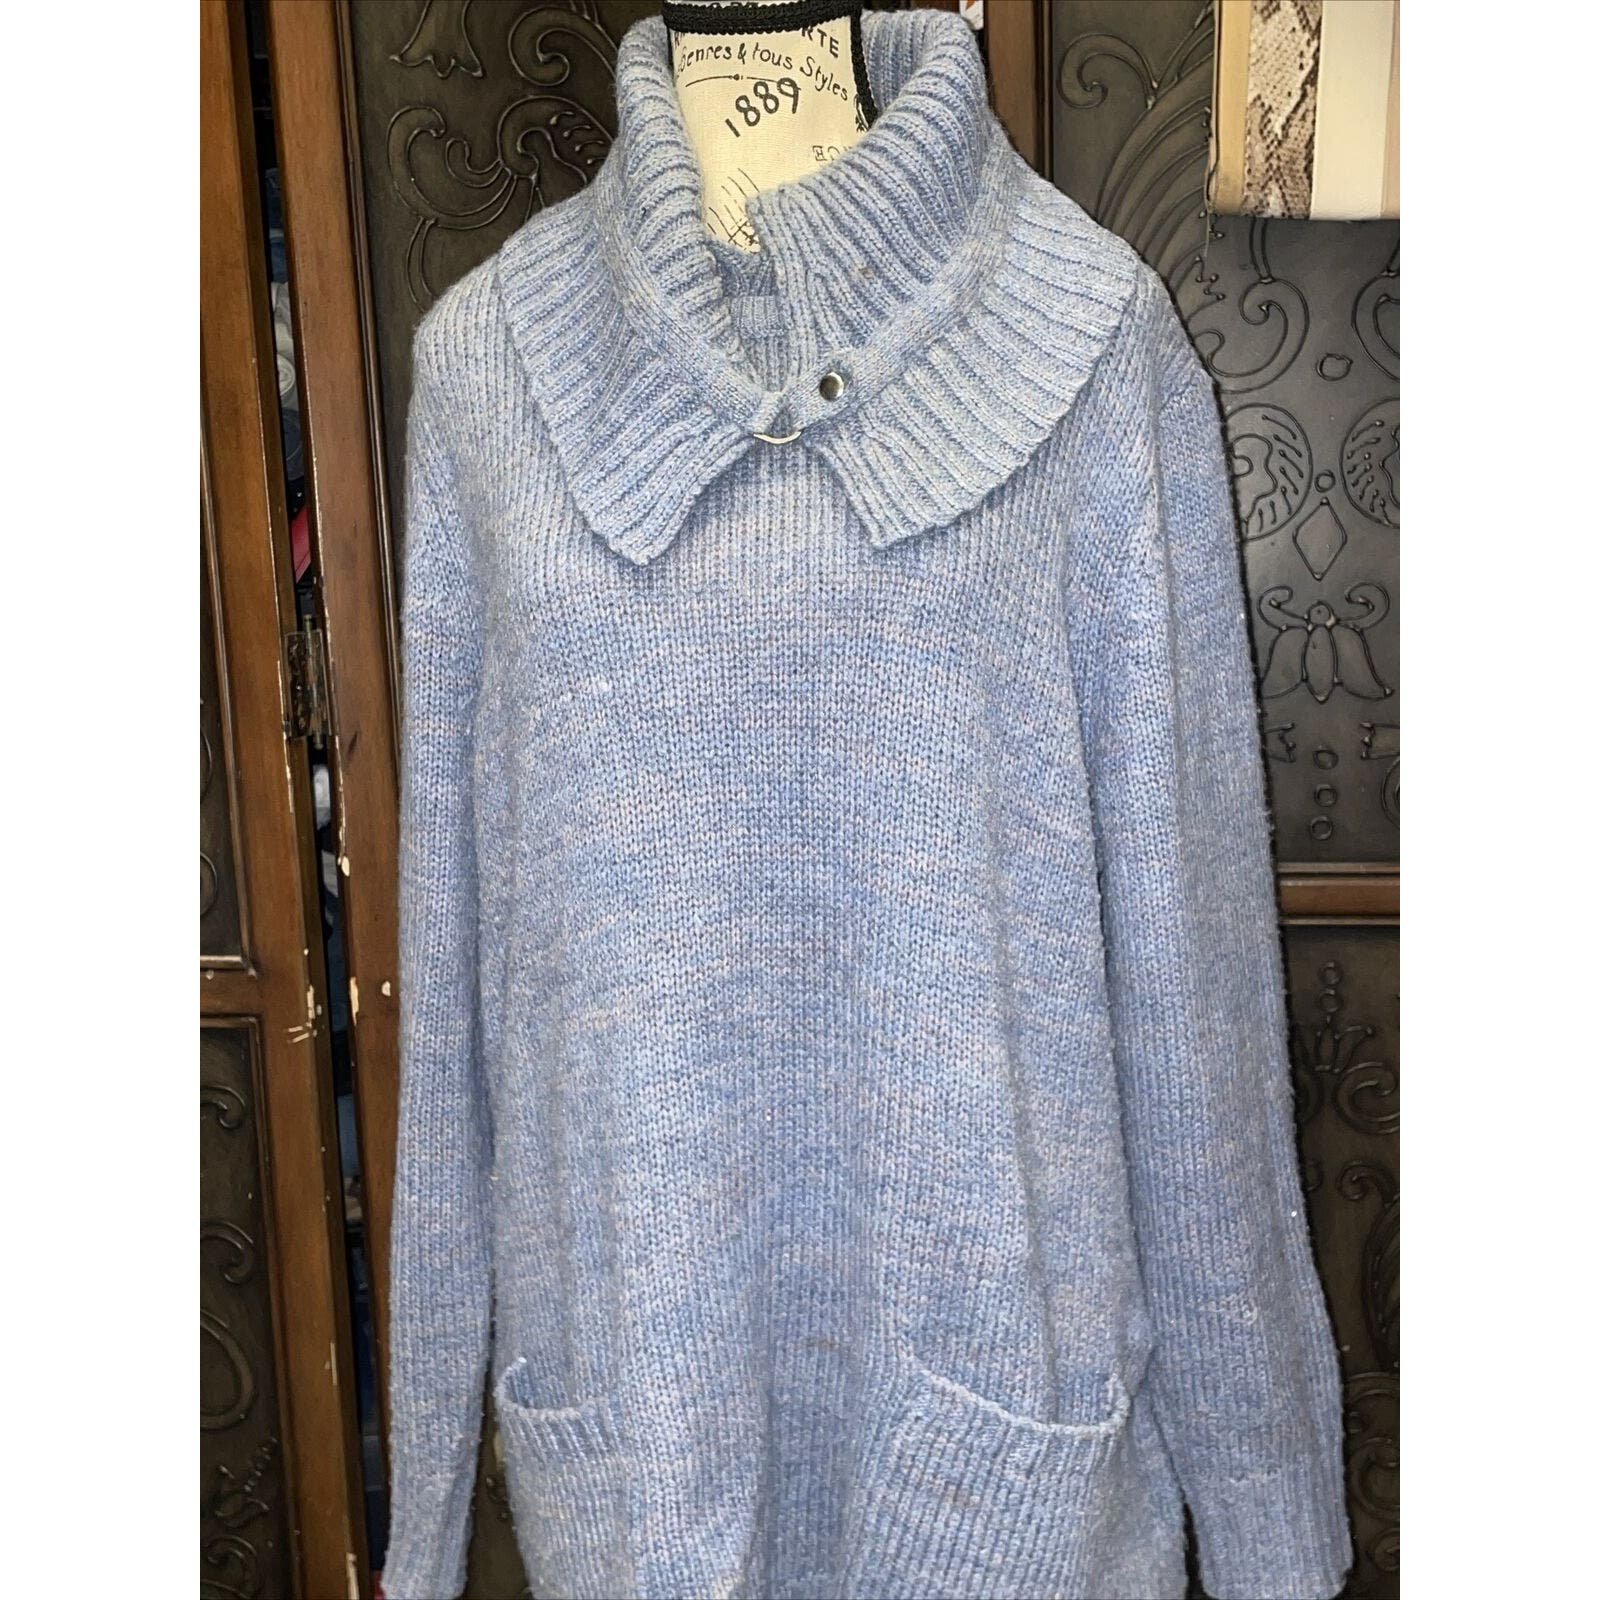 The Best Seller Soft Surroundings Wool Blend 1X Blue Knit Sweater Women´s HreYEheFg online store